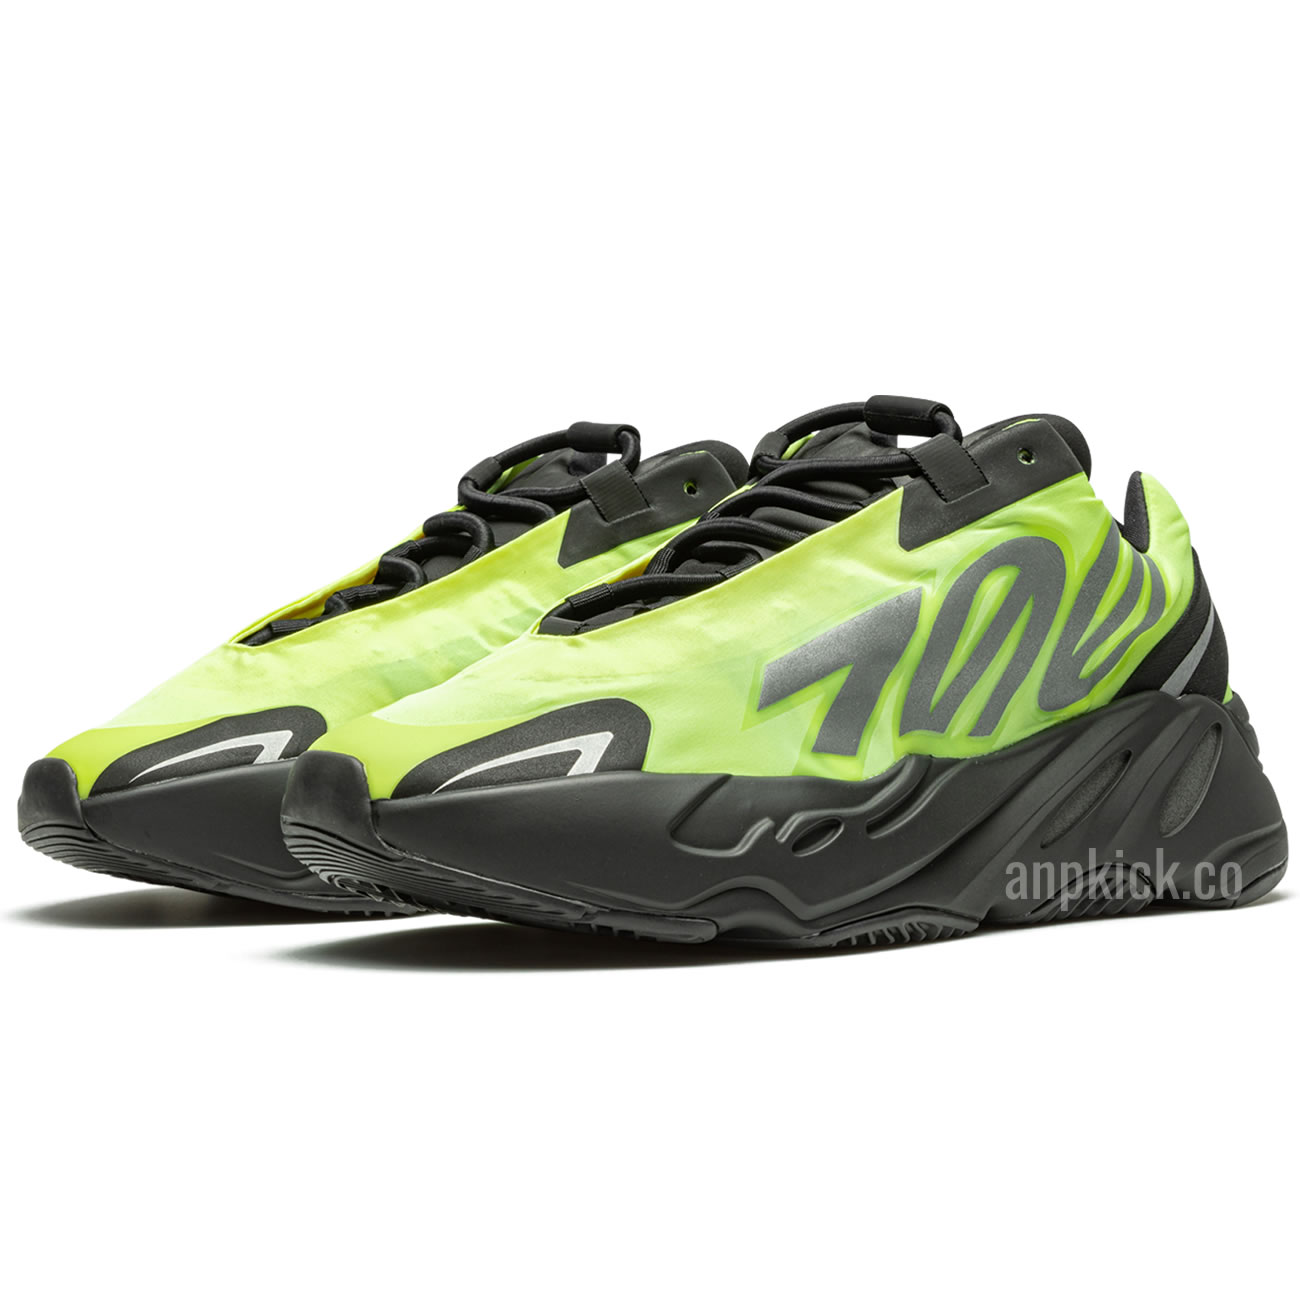 Adidas Yeezy Boost 700 Mnvn Phosphor Fy3727 New Release Date (2) - newkick.org